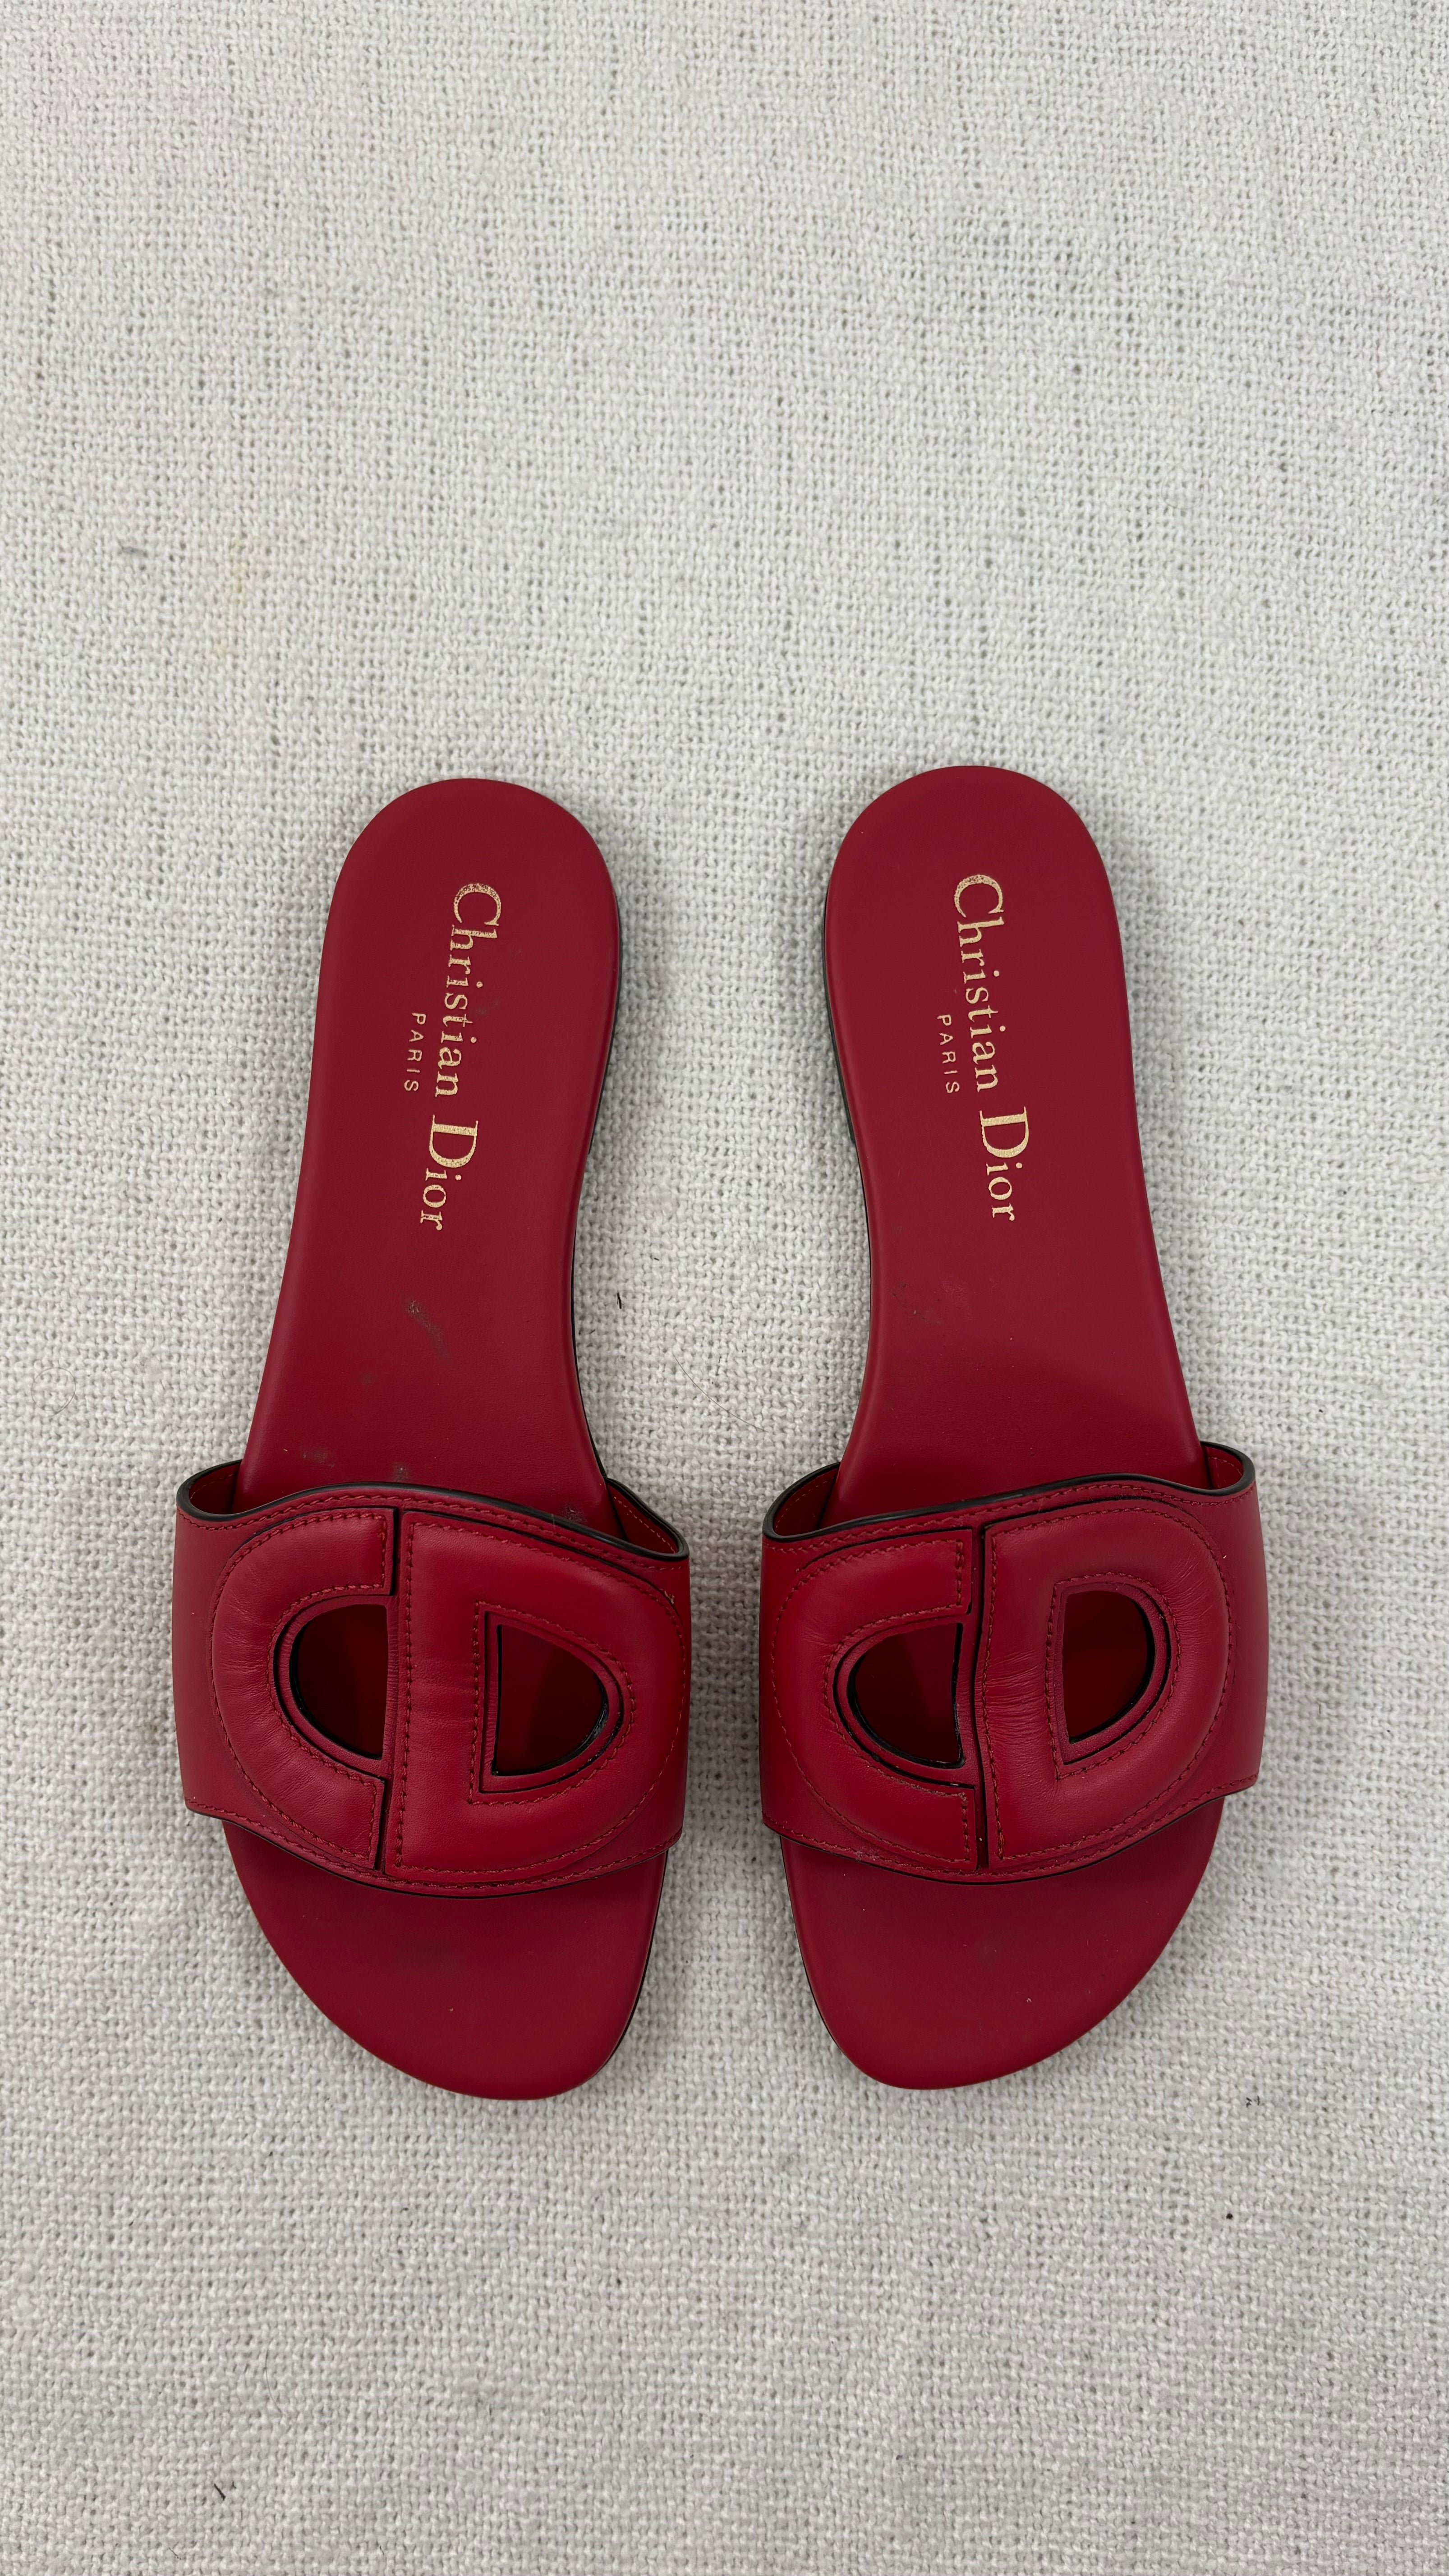 Dior red flats - 3.5 UK